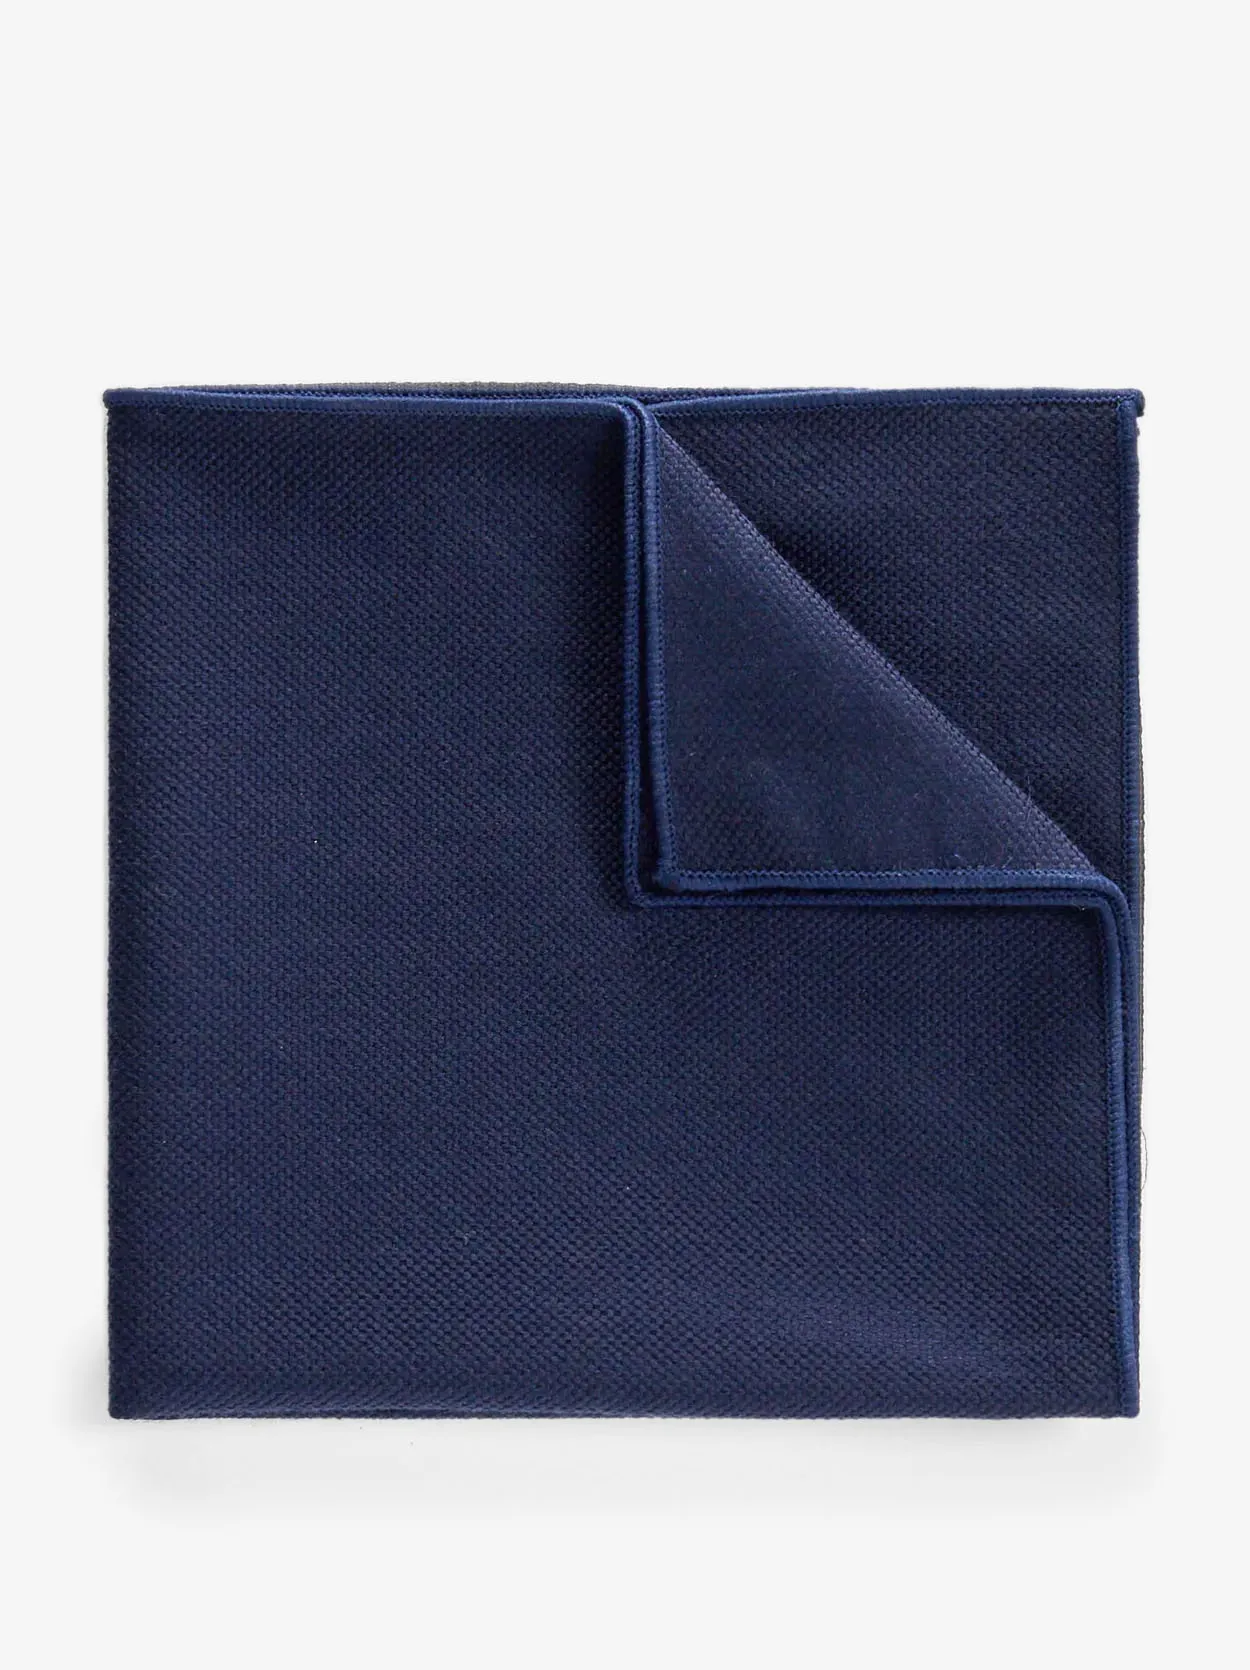 Blue Pocket Square Wool